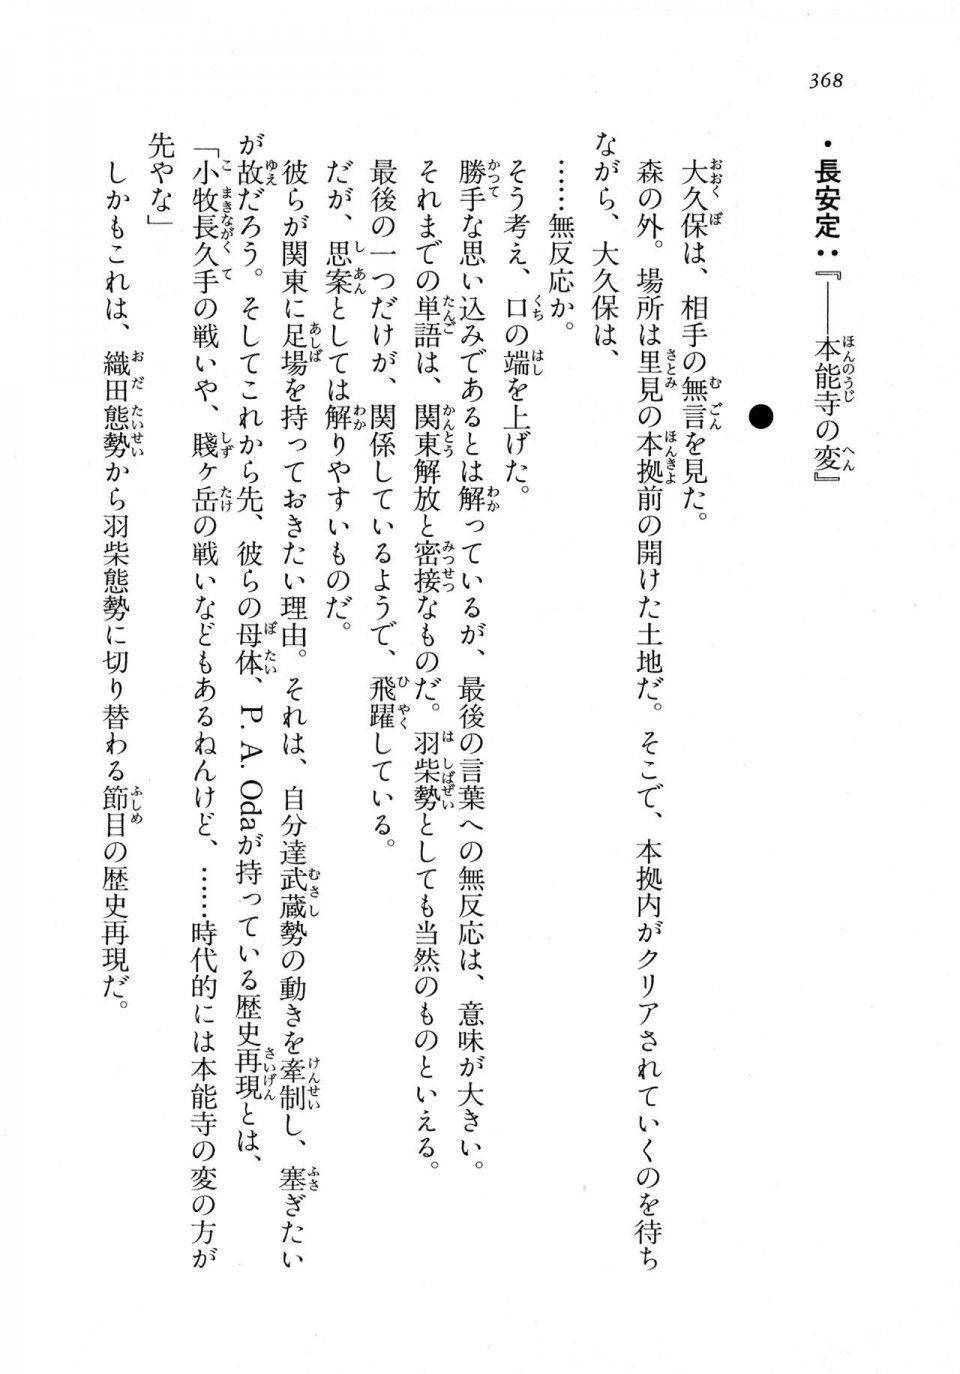 Kyoukai Senjou no Horizon LN Vol 18(7C) Part 1 - Photo #368